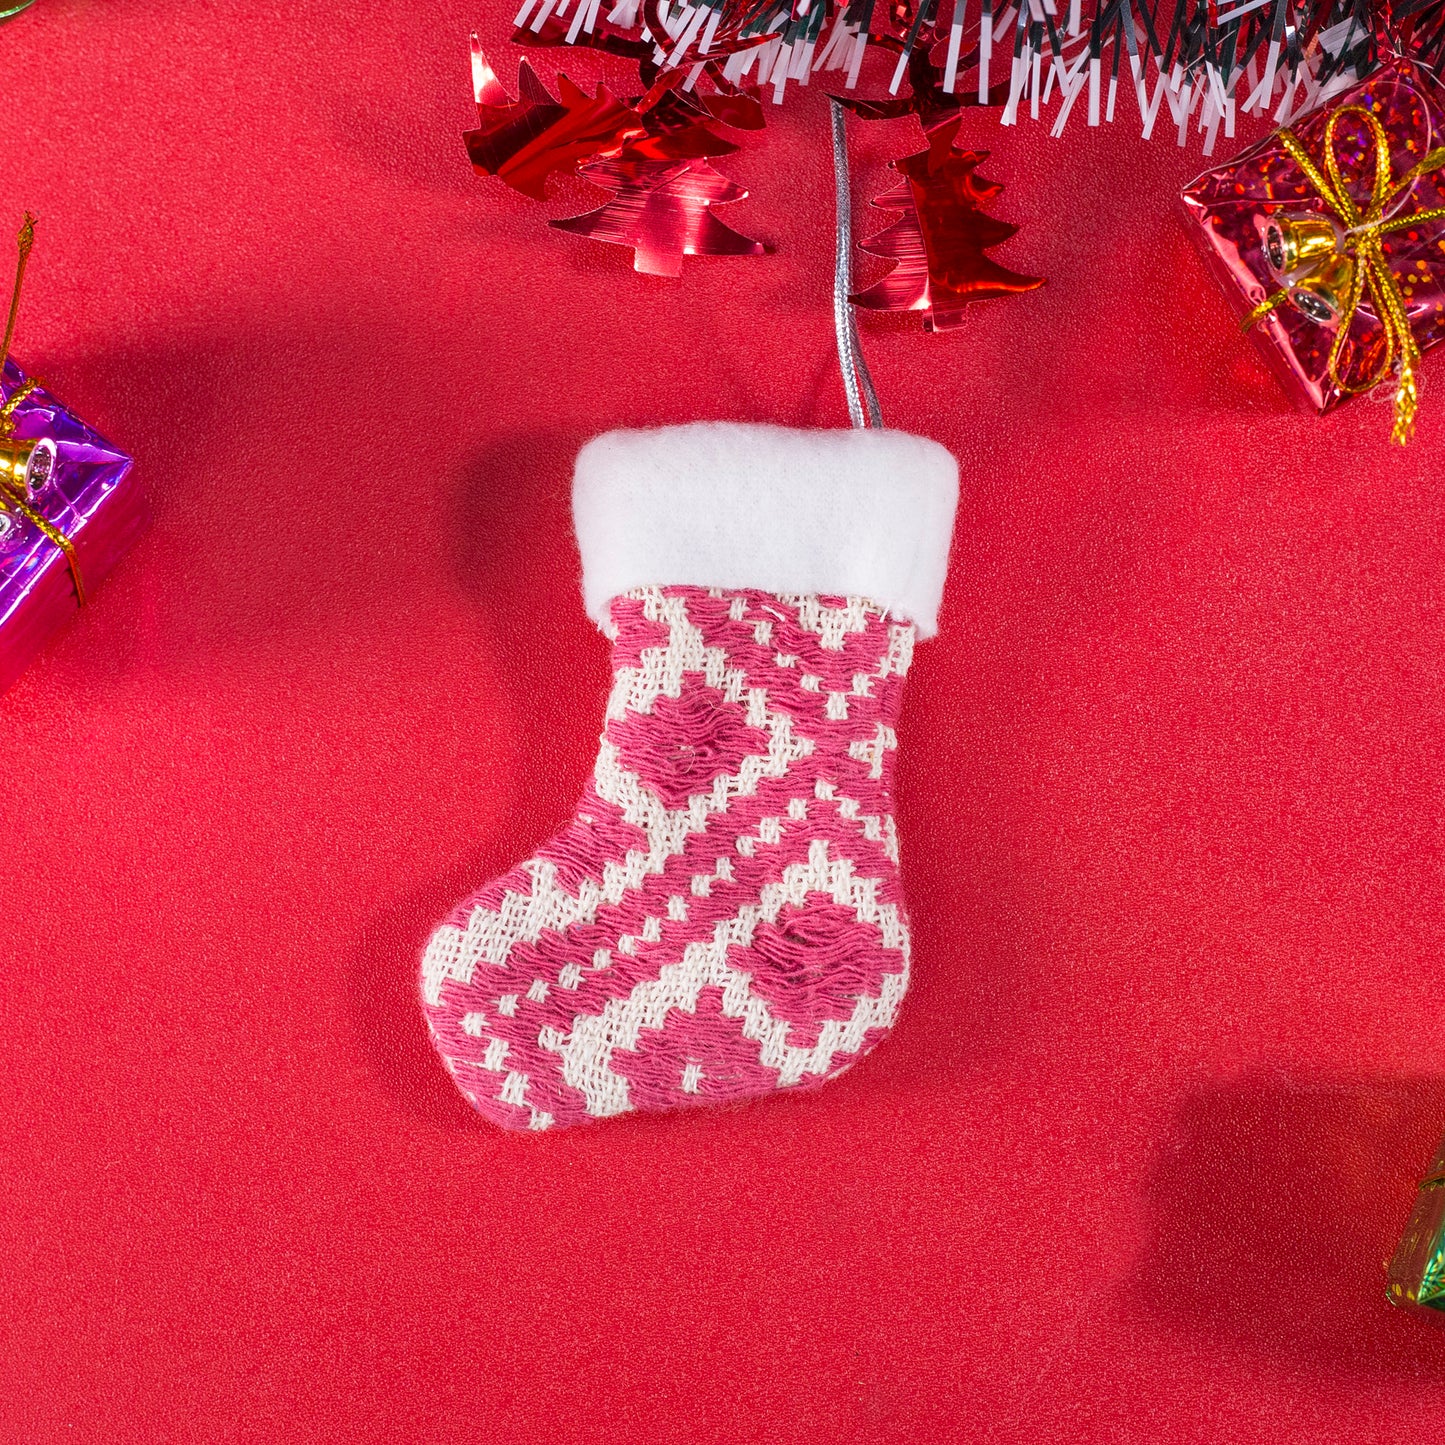 Christmas Tree decor- Little socks